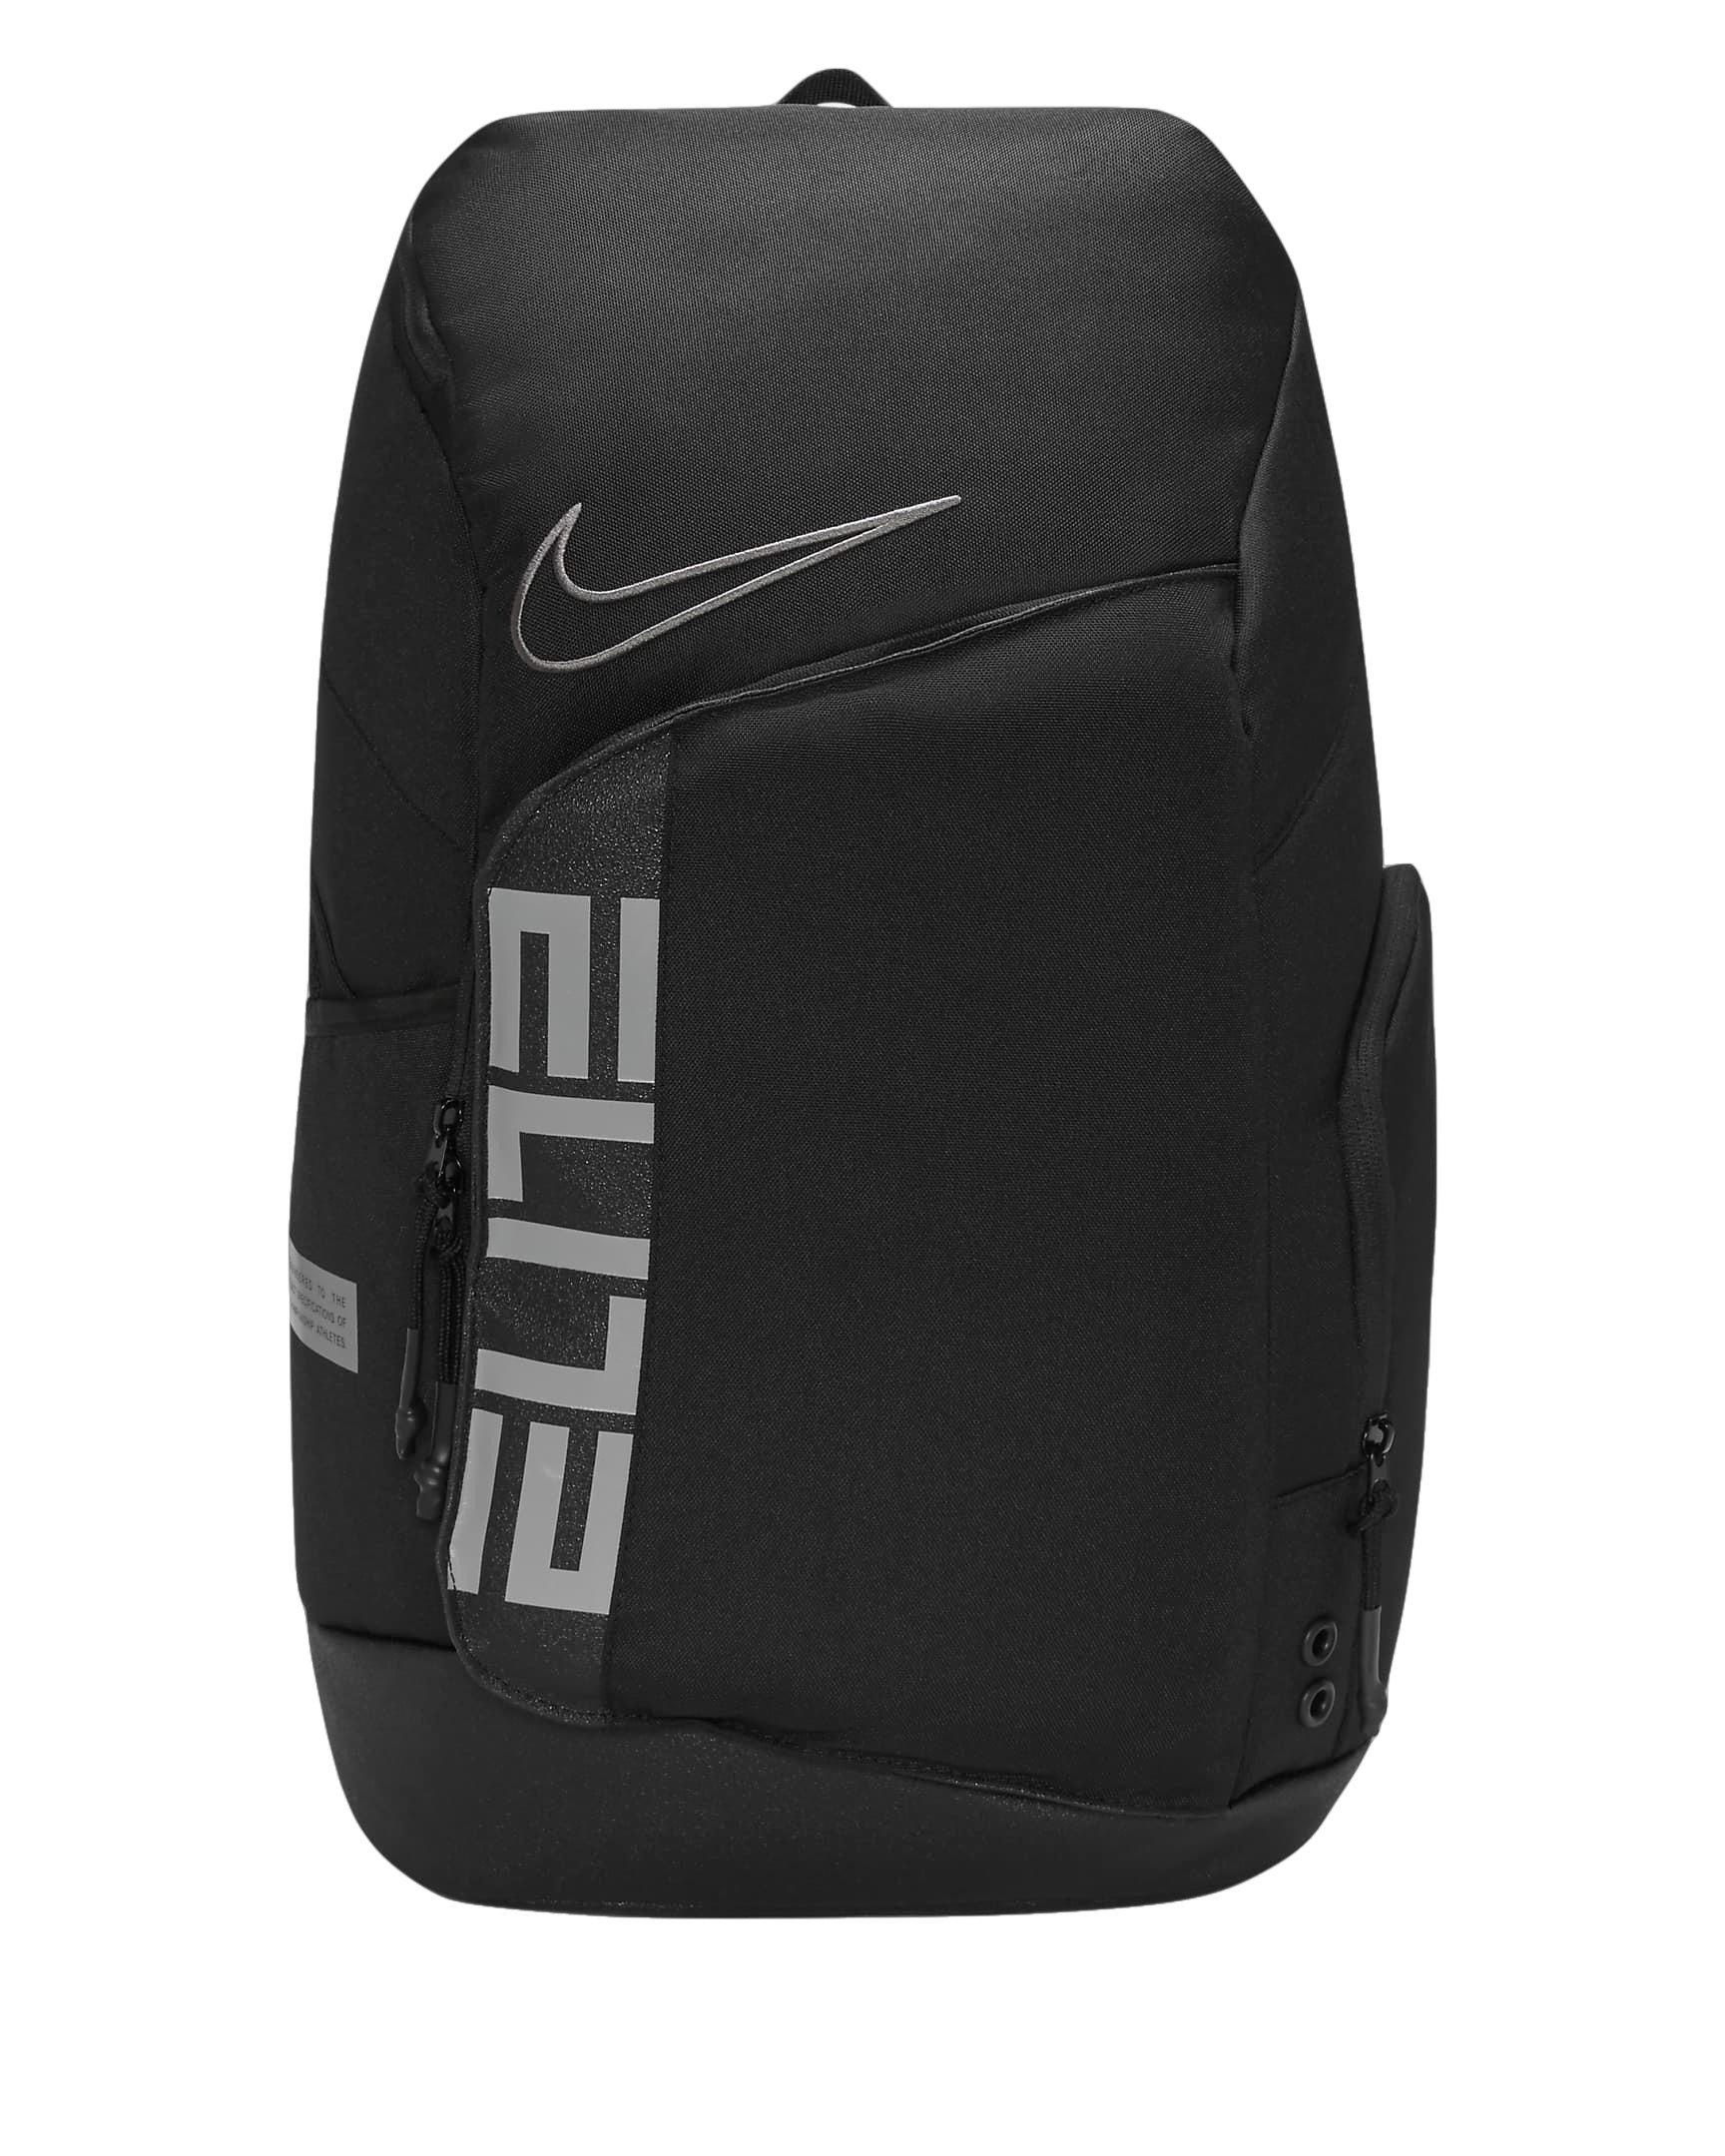 Nike Hoops Elite Pro Basketball Backpack,Black/Metallic Gold,One Size 